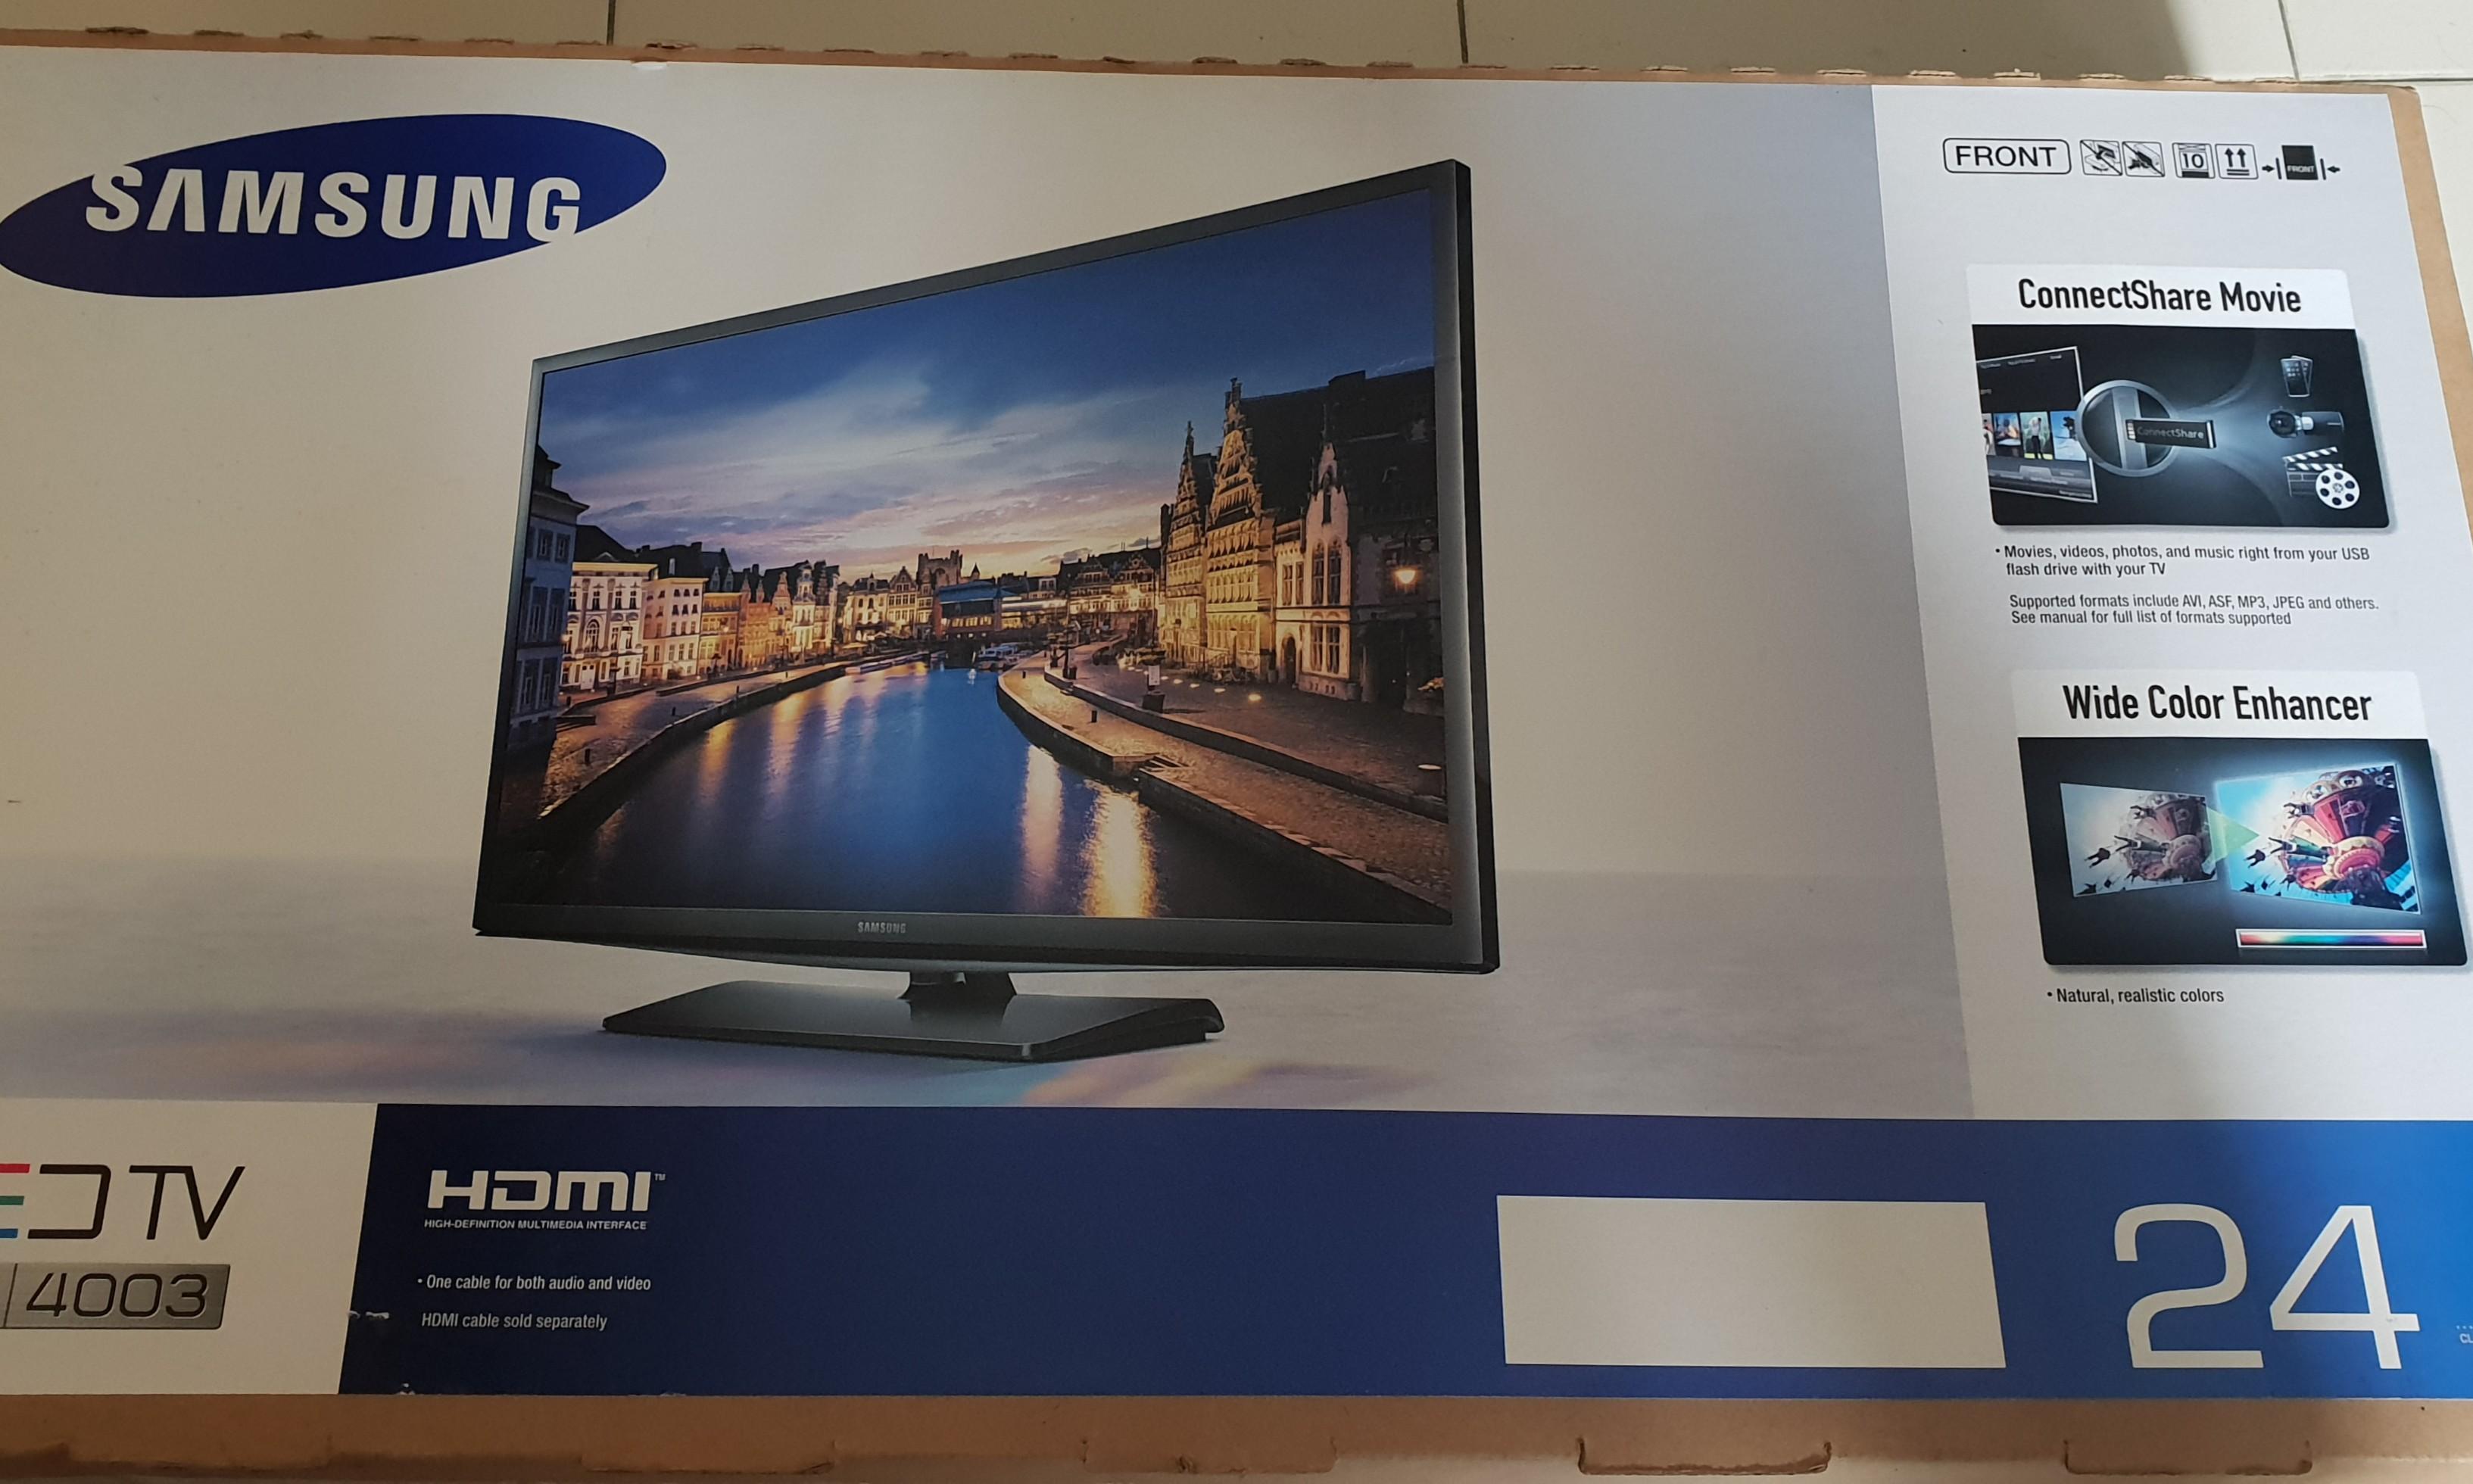 Телевизоры 24 смарт рейтинг. Телевизор самсунг 24 дюйма 2018 год. Samsung TV Home. Kion телевизор 24" Smart TV (24h5l56kf) - черный. Samsung телевизор Smart TV ошибка.